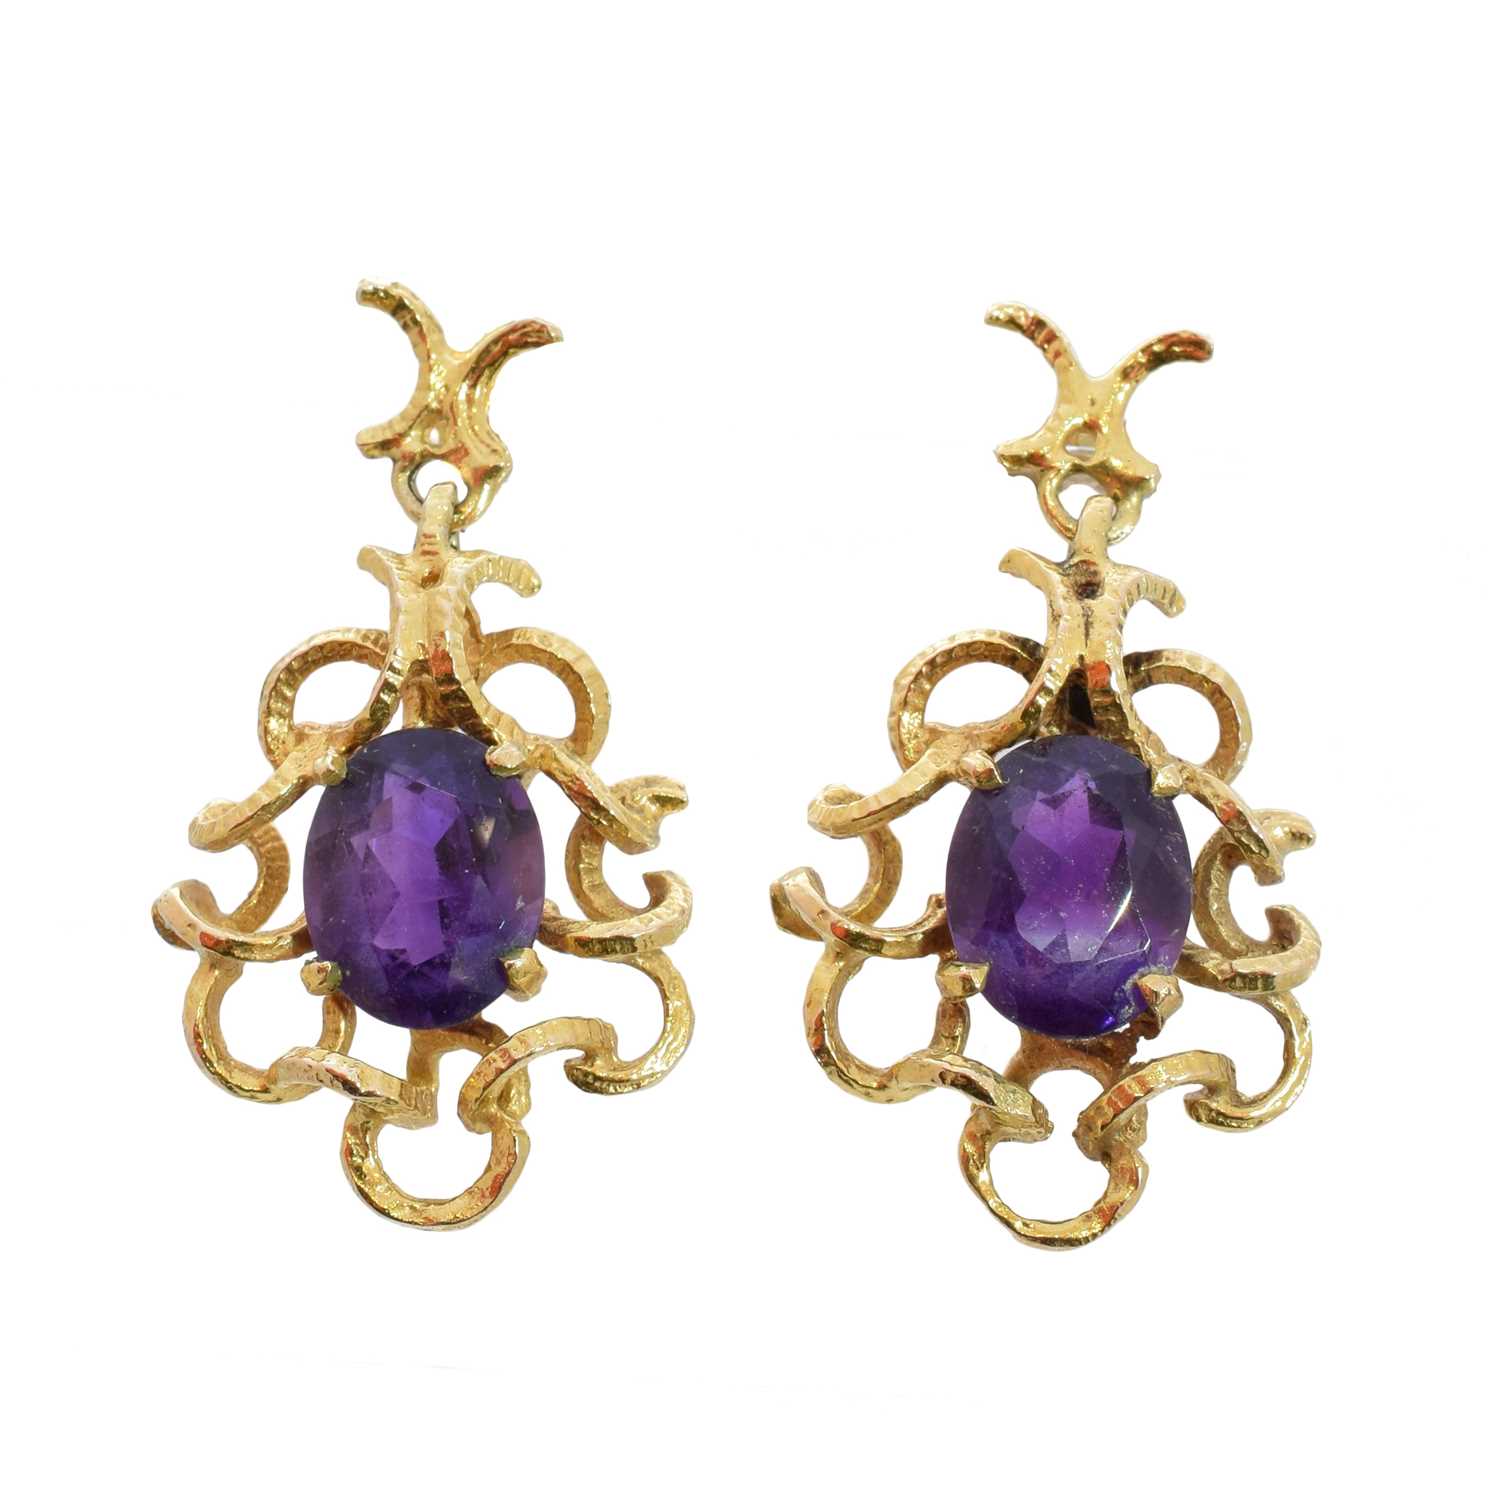 Lot 80 - A pair of 9ct gold amethyst earrings by Deakin & Francis